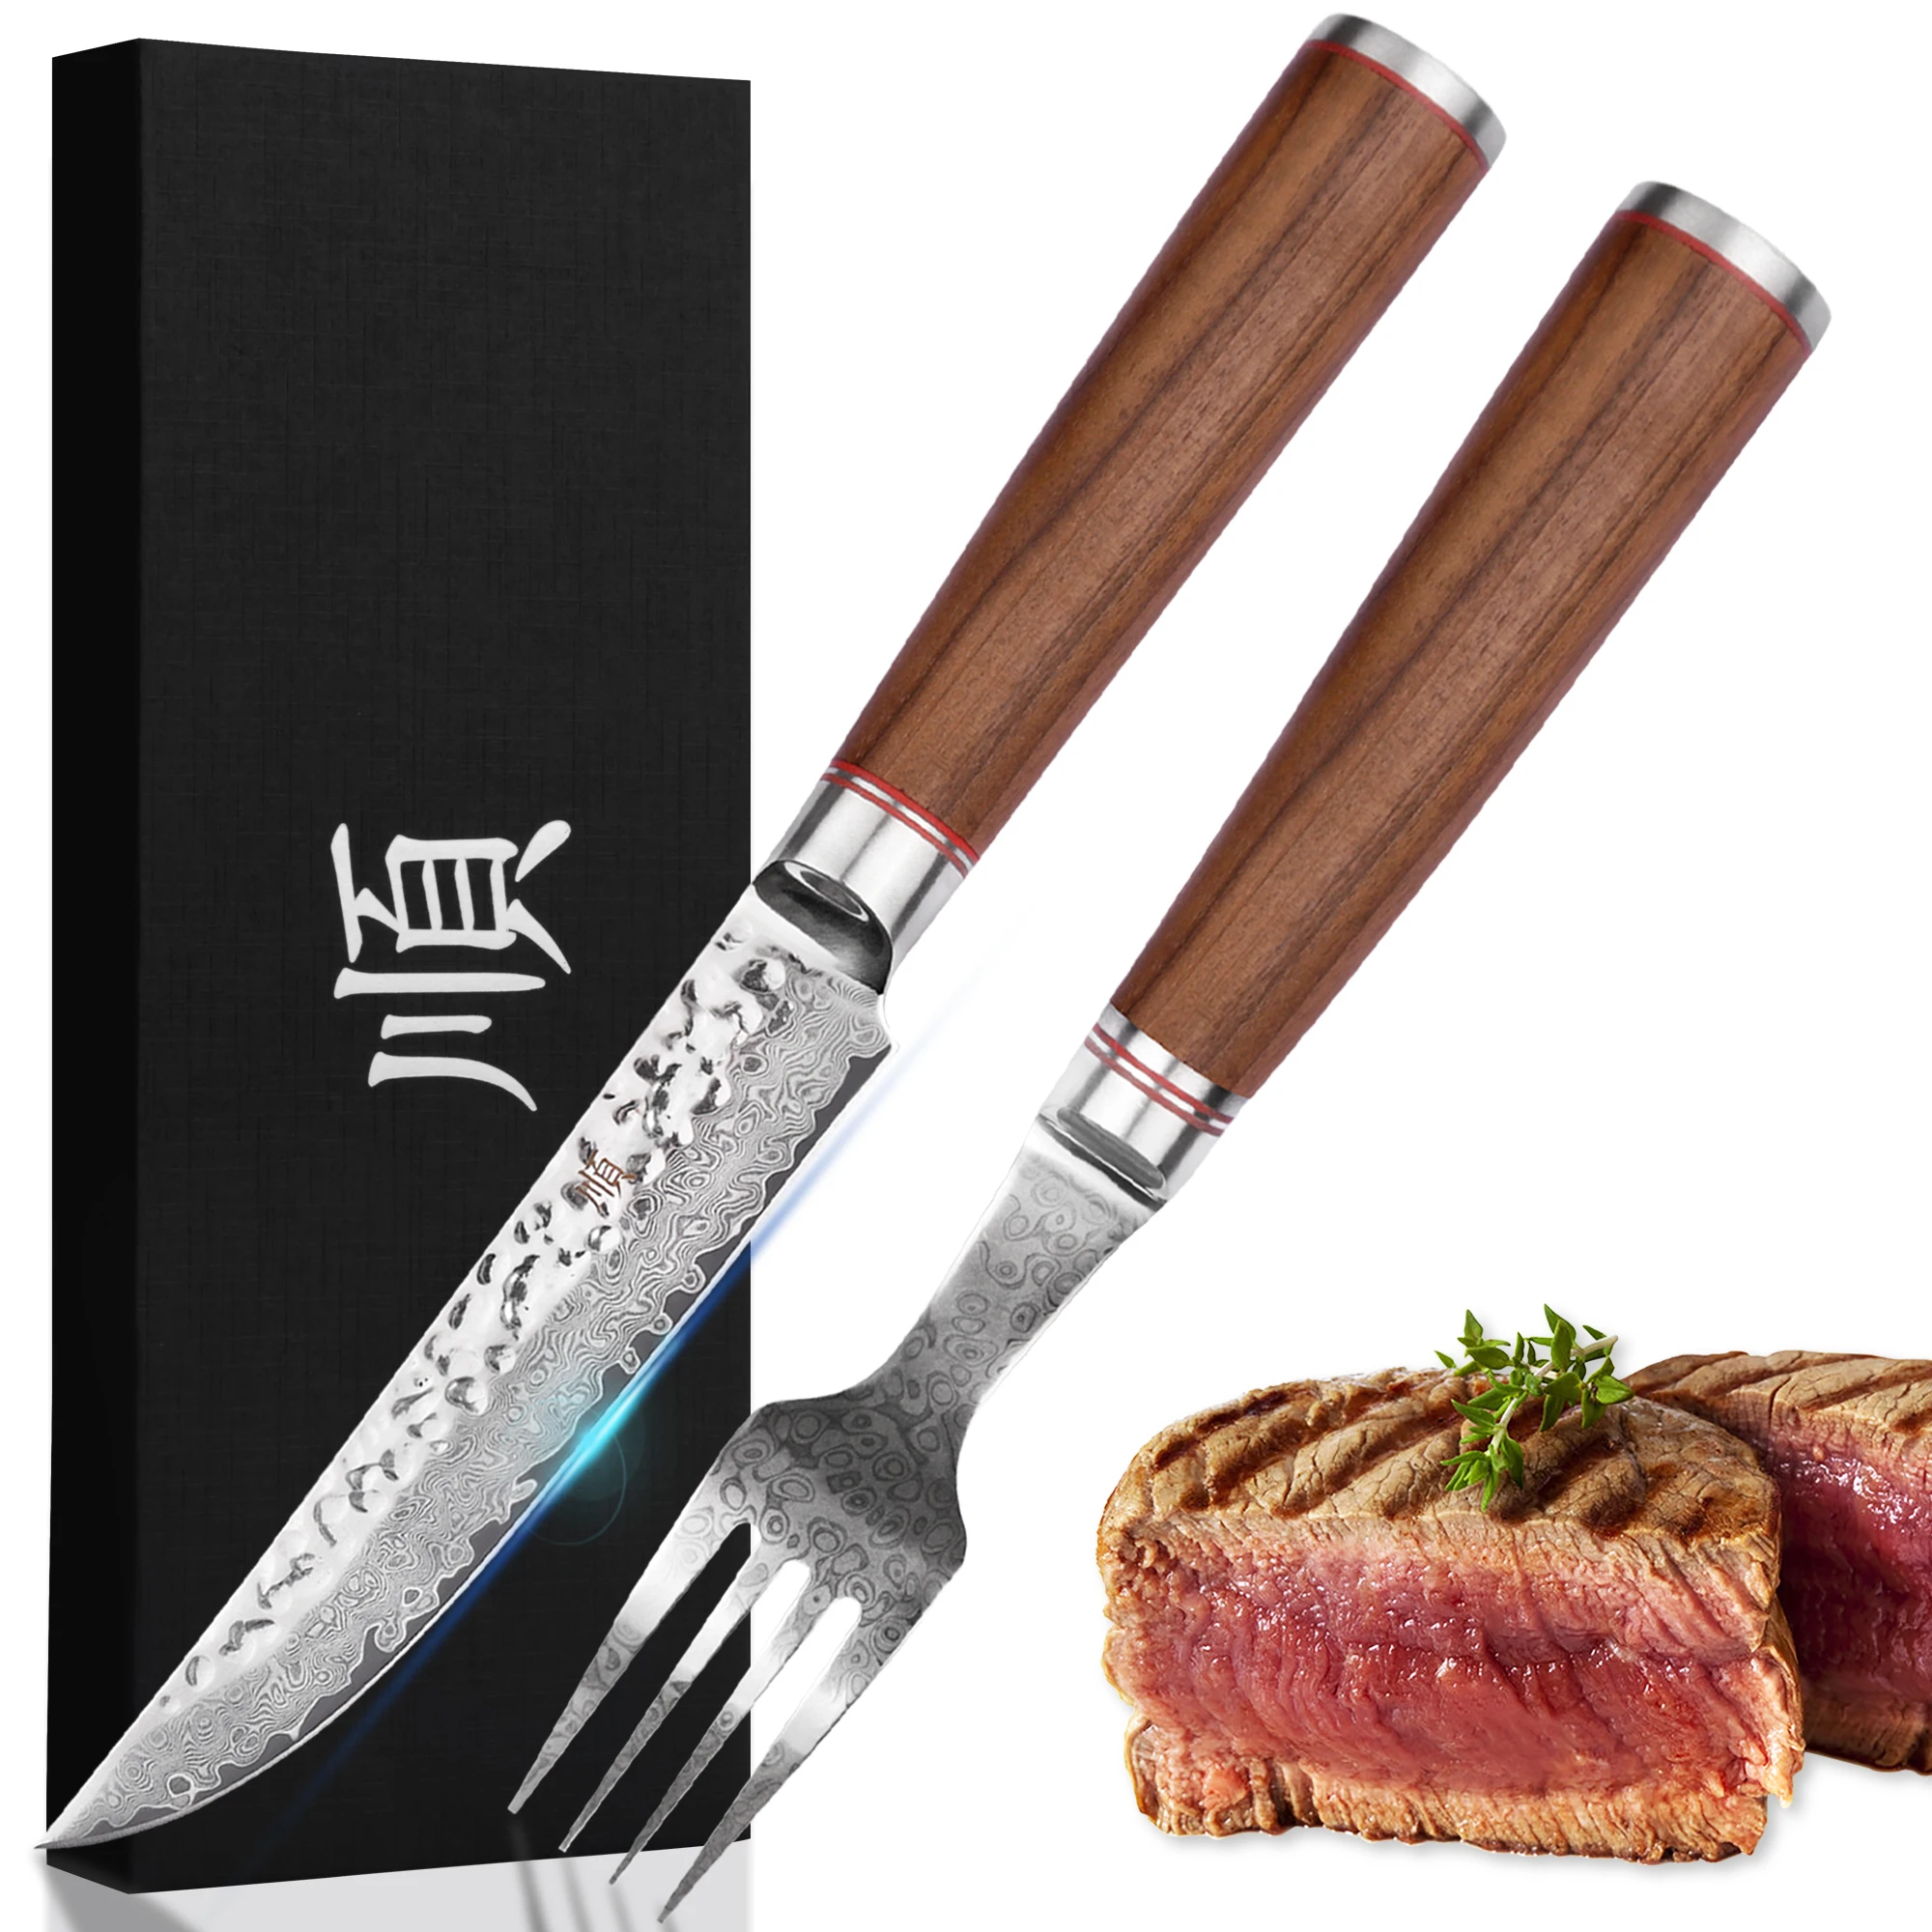 

Cutlery Set 2 for Piece - Japanese Hammered Damascus Steel Blade - Steak Knife Set - Natural Walnut Wood Handle